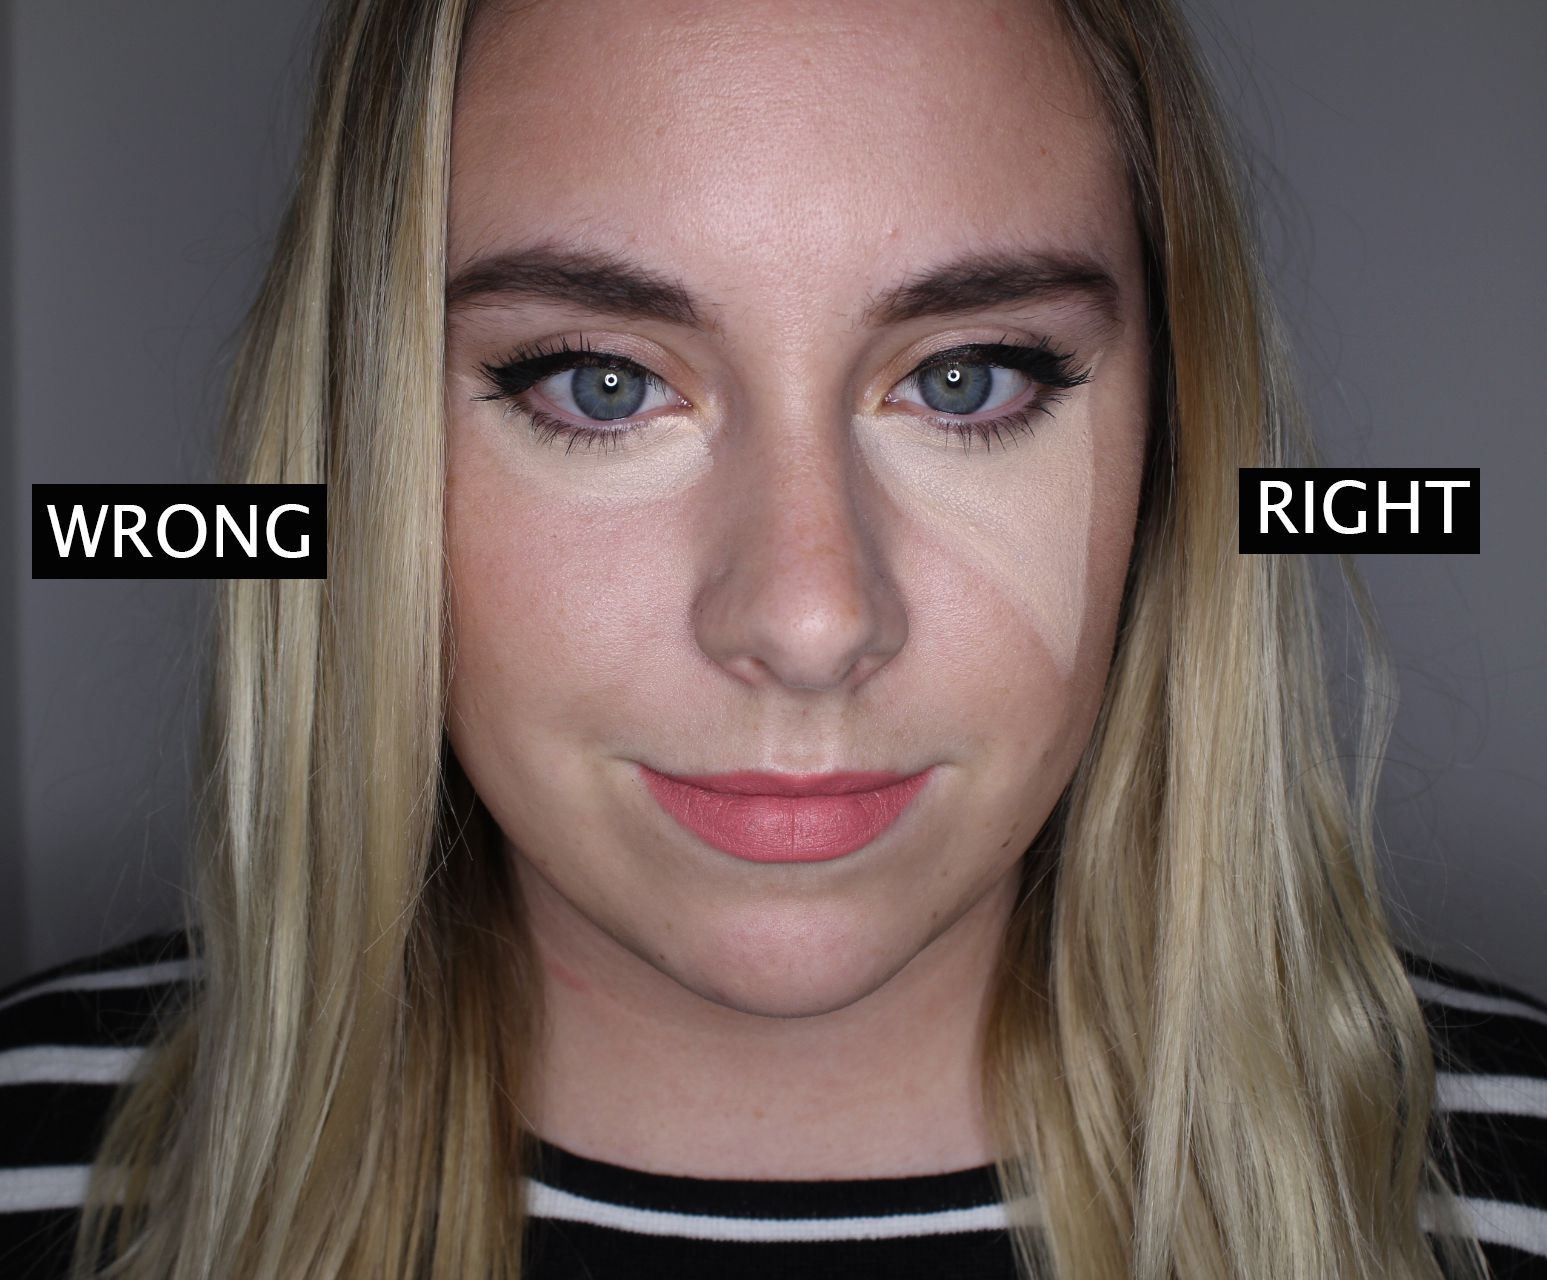 Eye Makeup To Make Eyes Look Bigger How To Make Your Eyes Look Bigger With And Without Makeup 10 Hacks